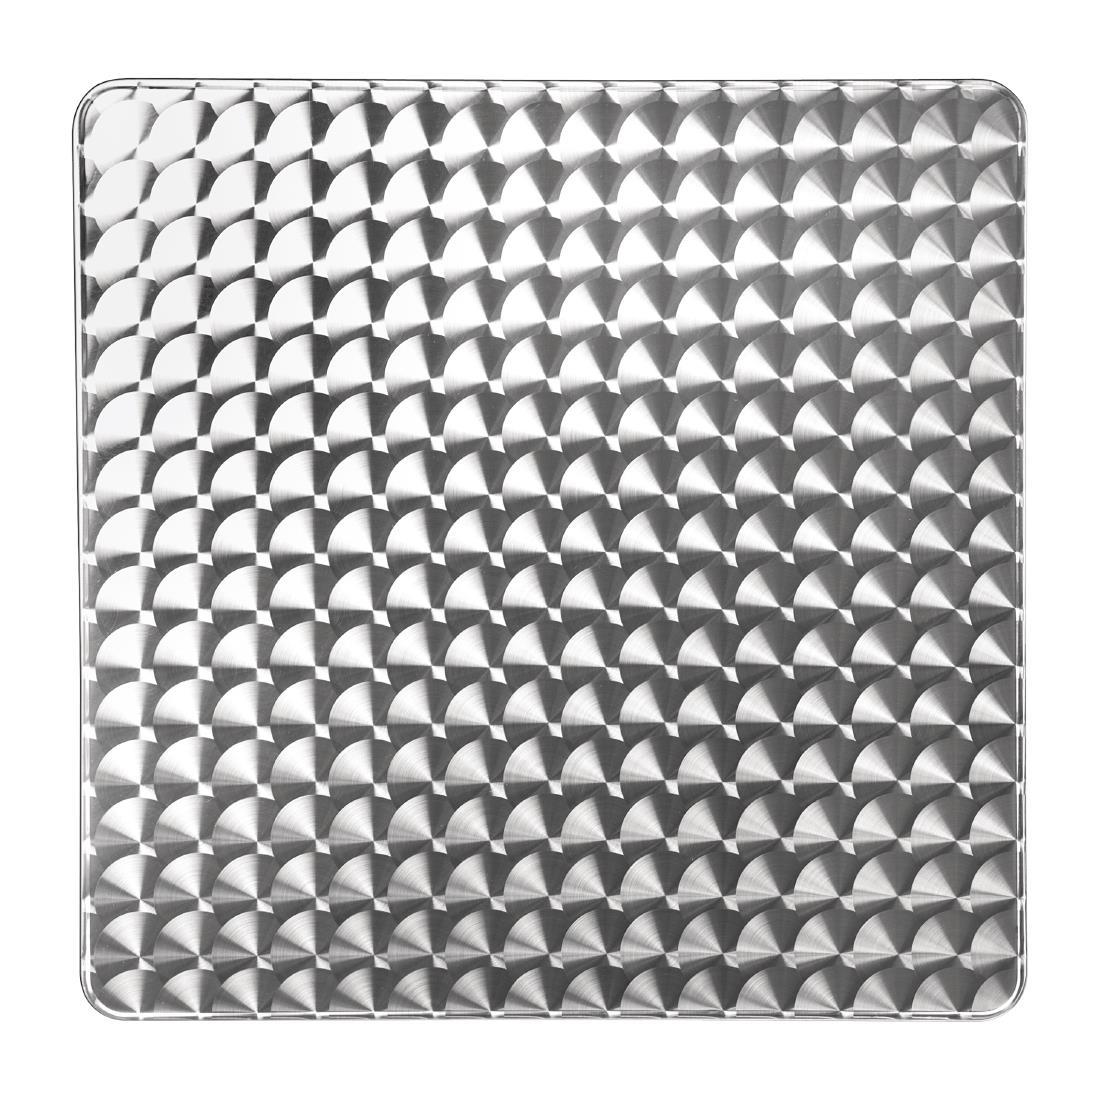 Bolero Square Stainless Steel Flip Top Table 600mm (Single) - CG838  - 2